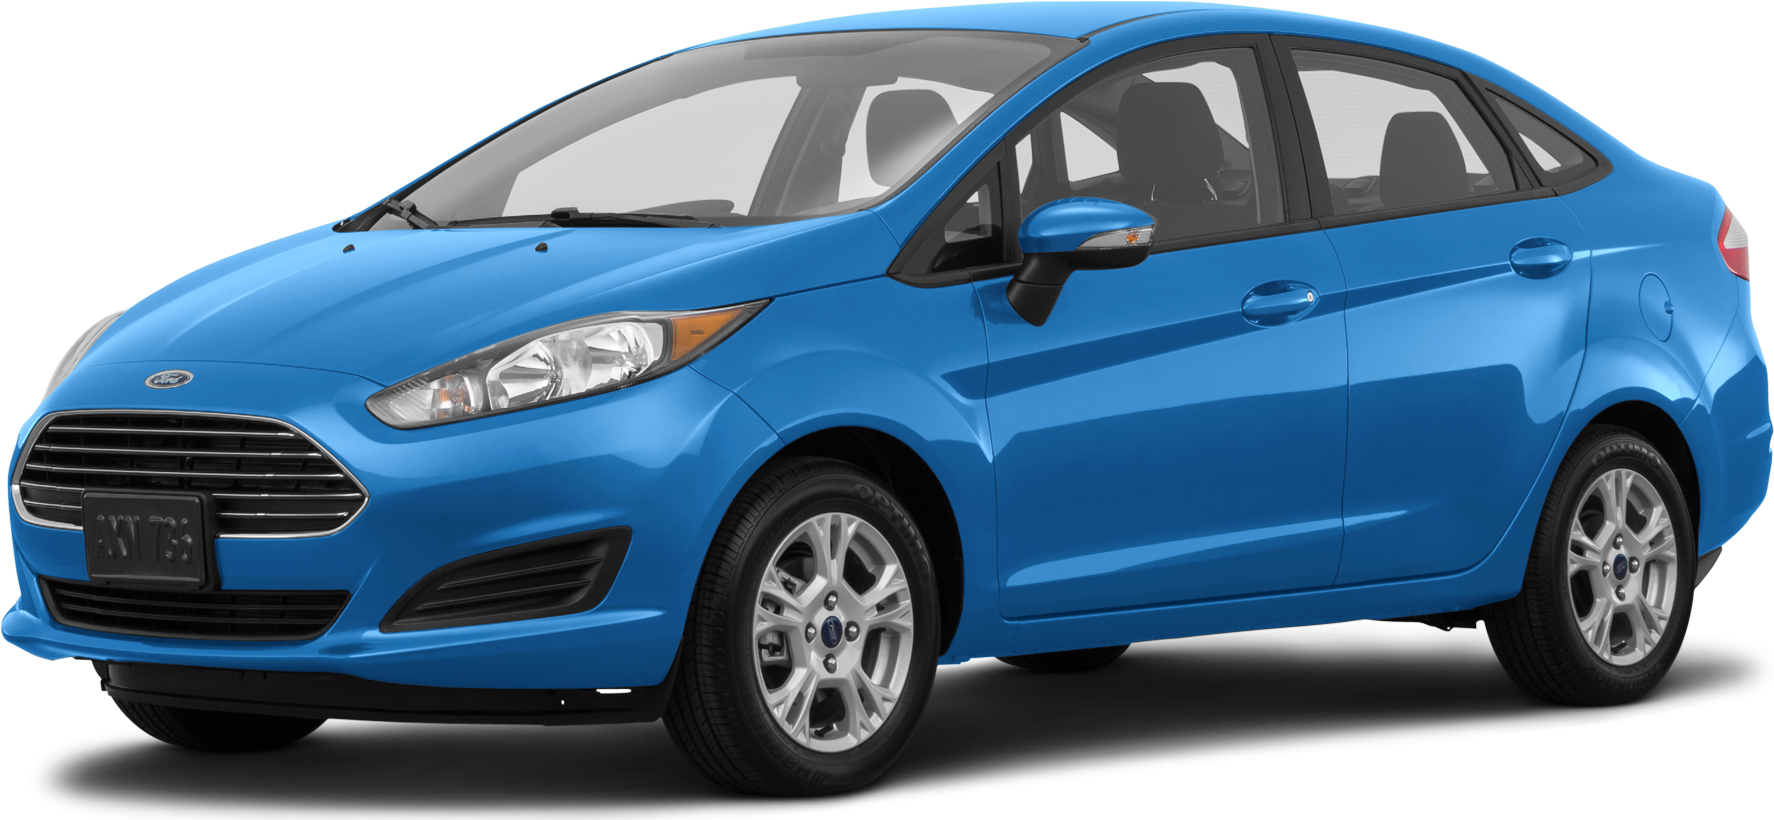 over het algemeen condoom Ham 2016 Ford Fiesta Values & Cars for Sale | Kelley Blue Book